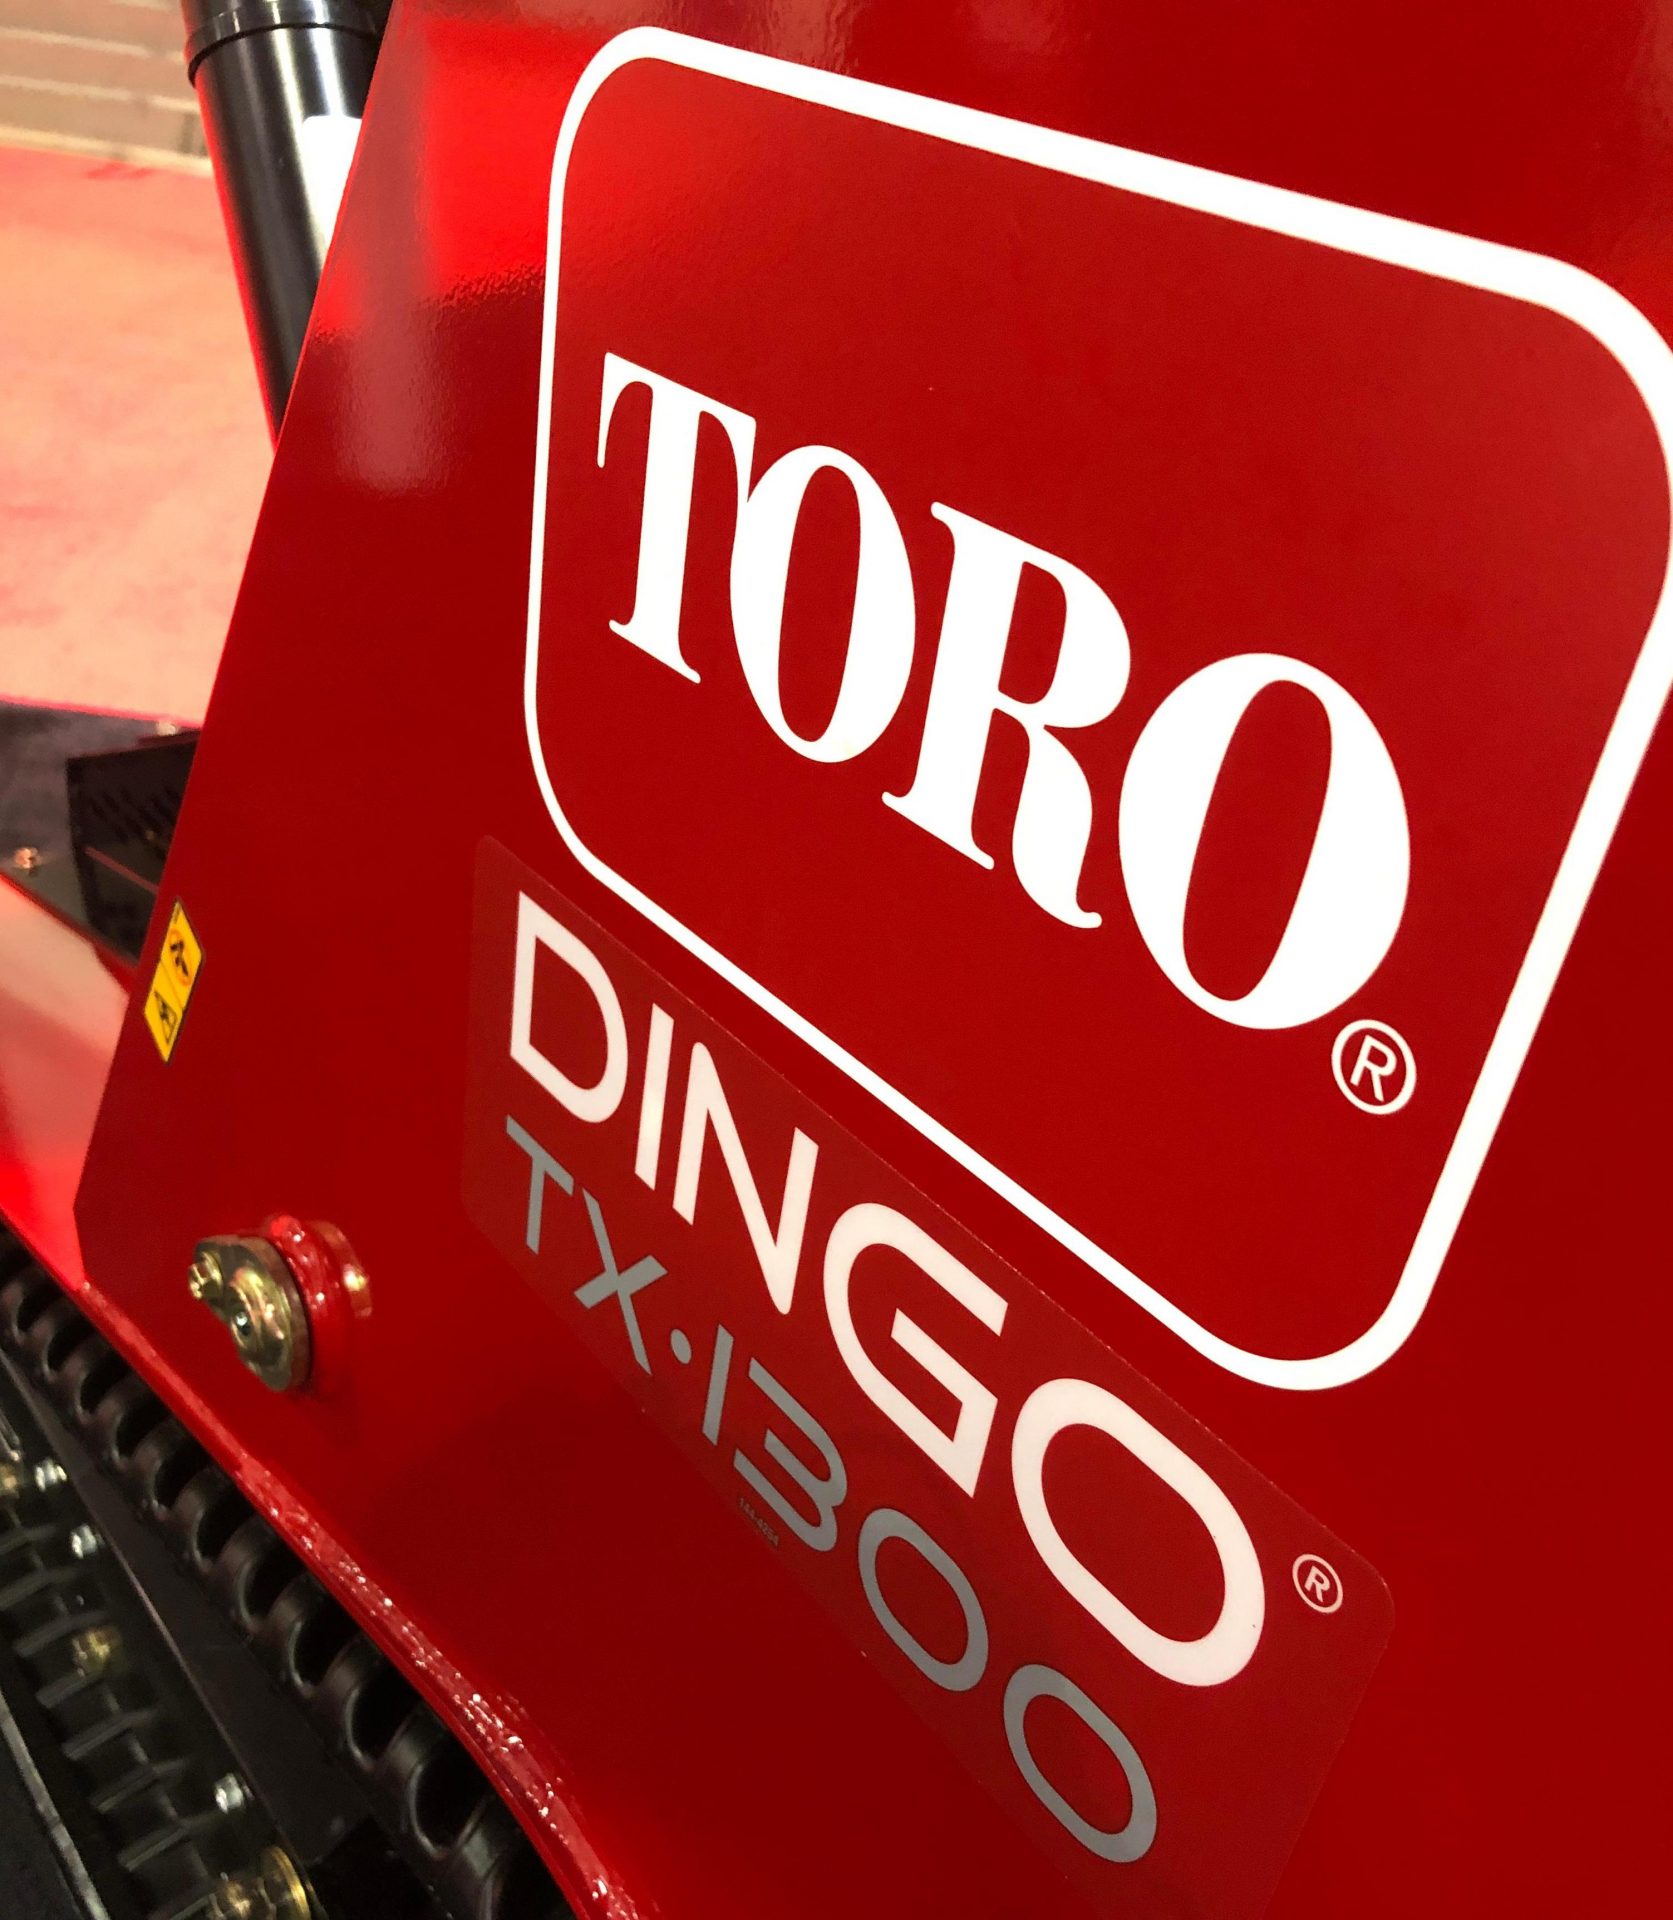 Toro Dingo TX 1300 branding